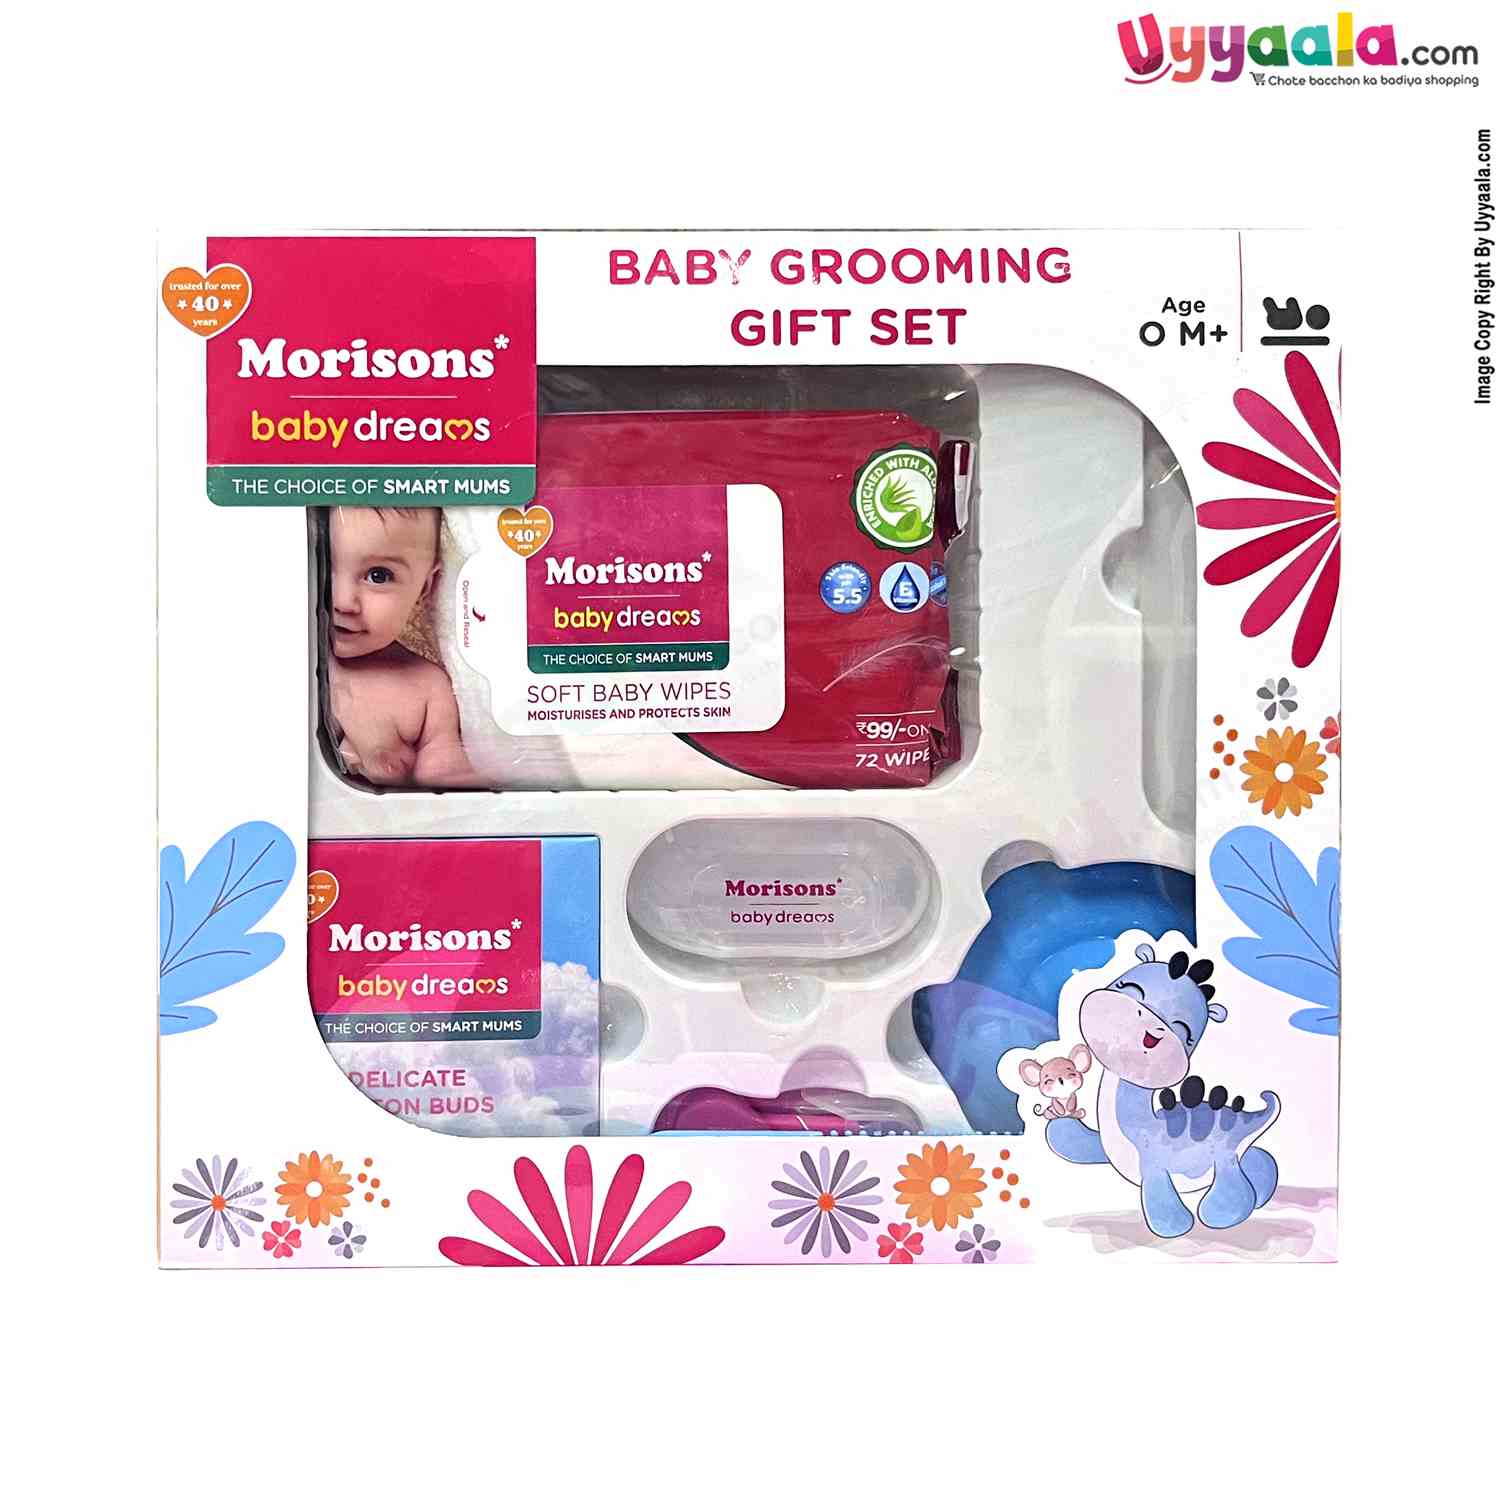 MORISONS Baby Grooming Gift Set